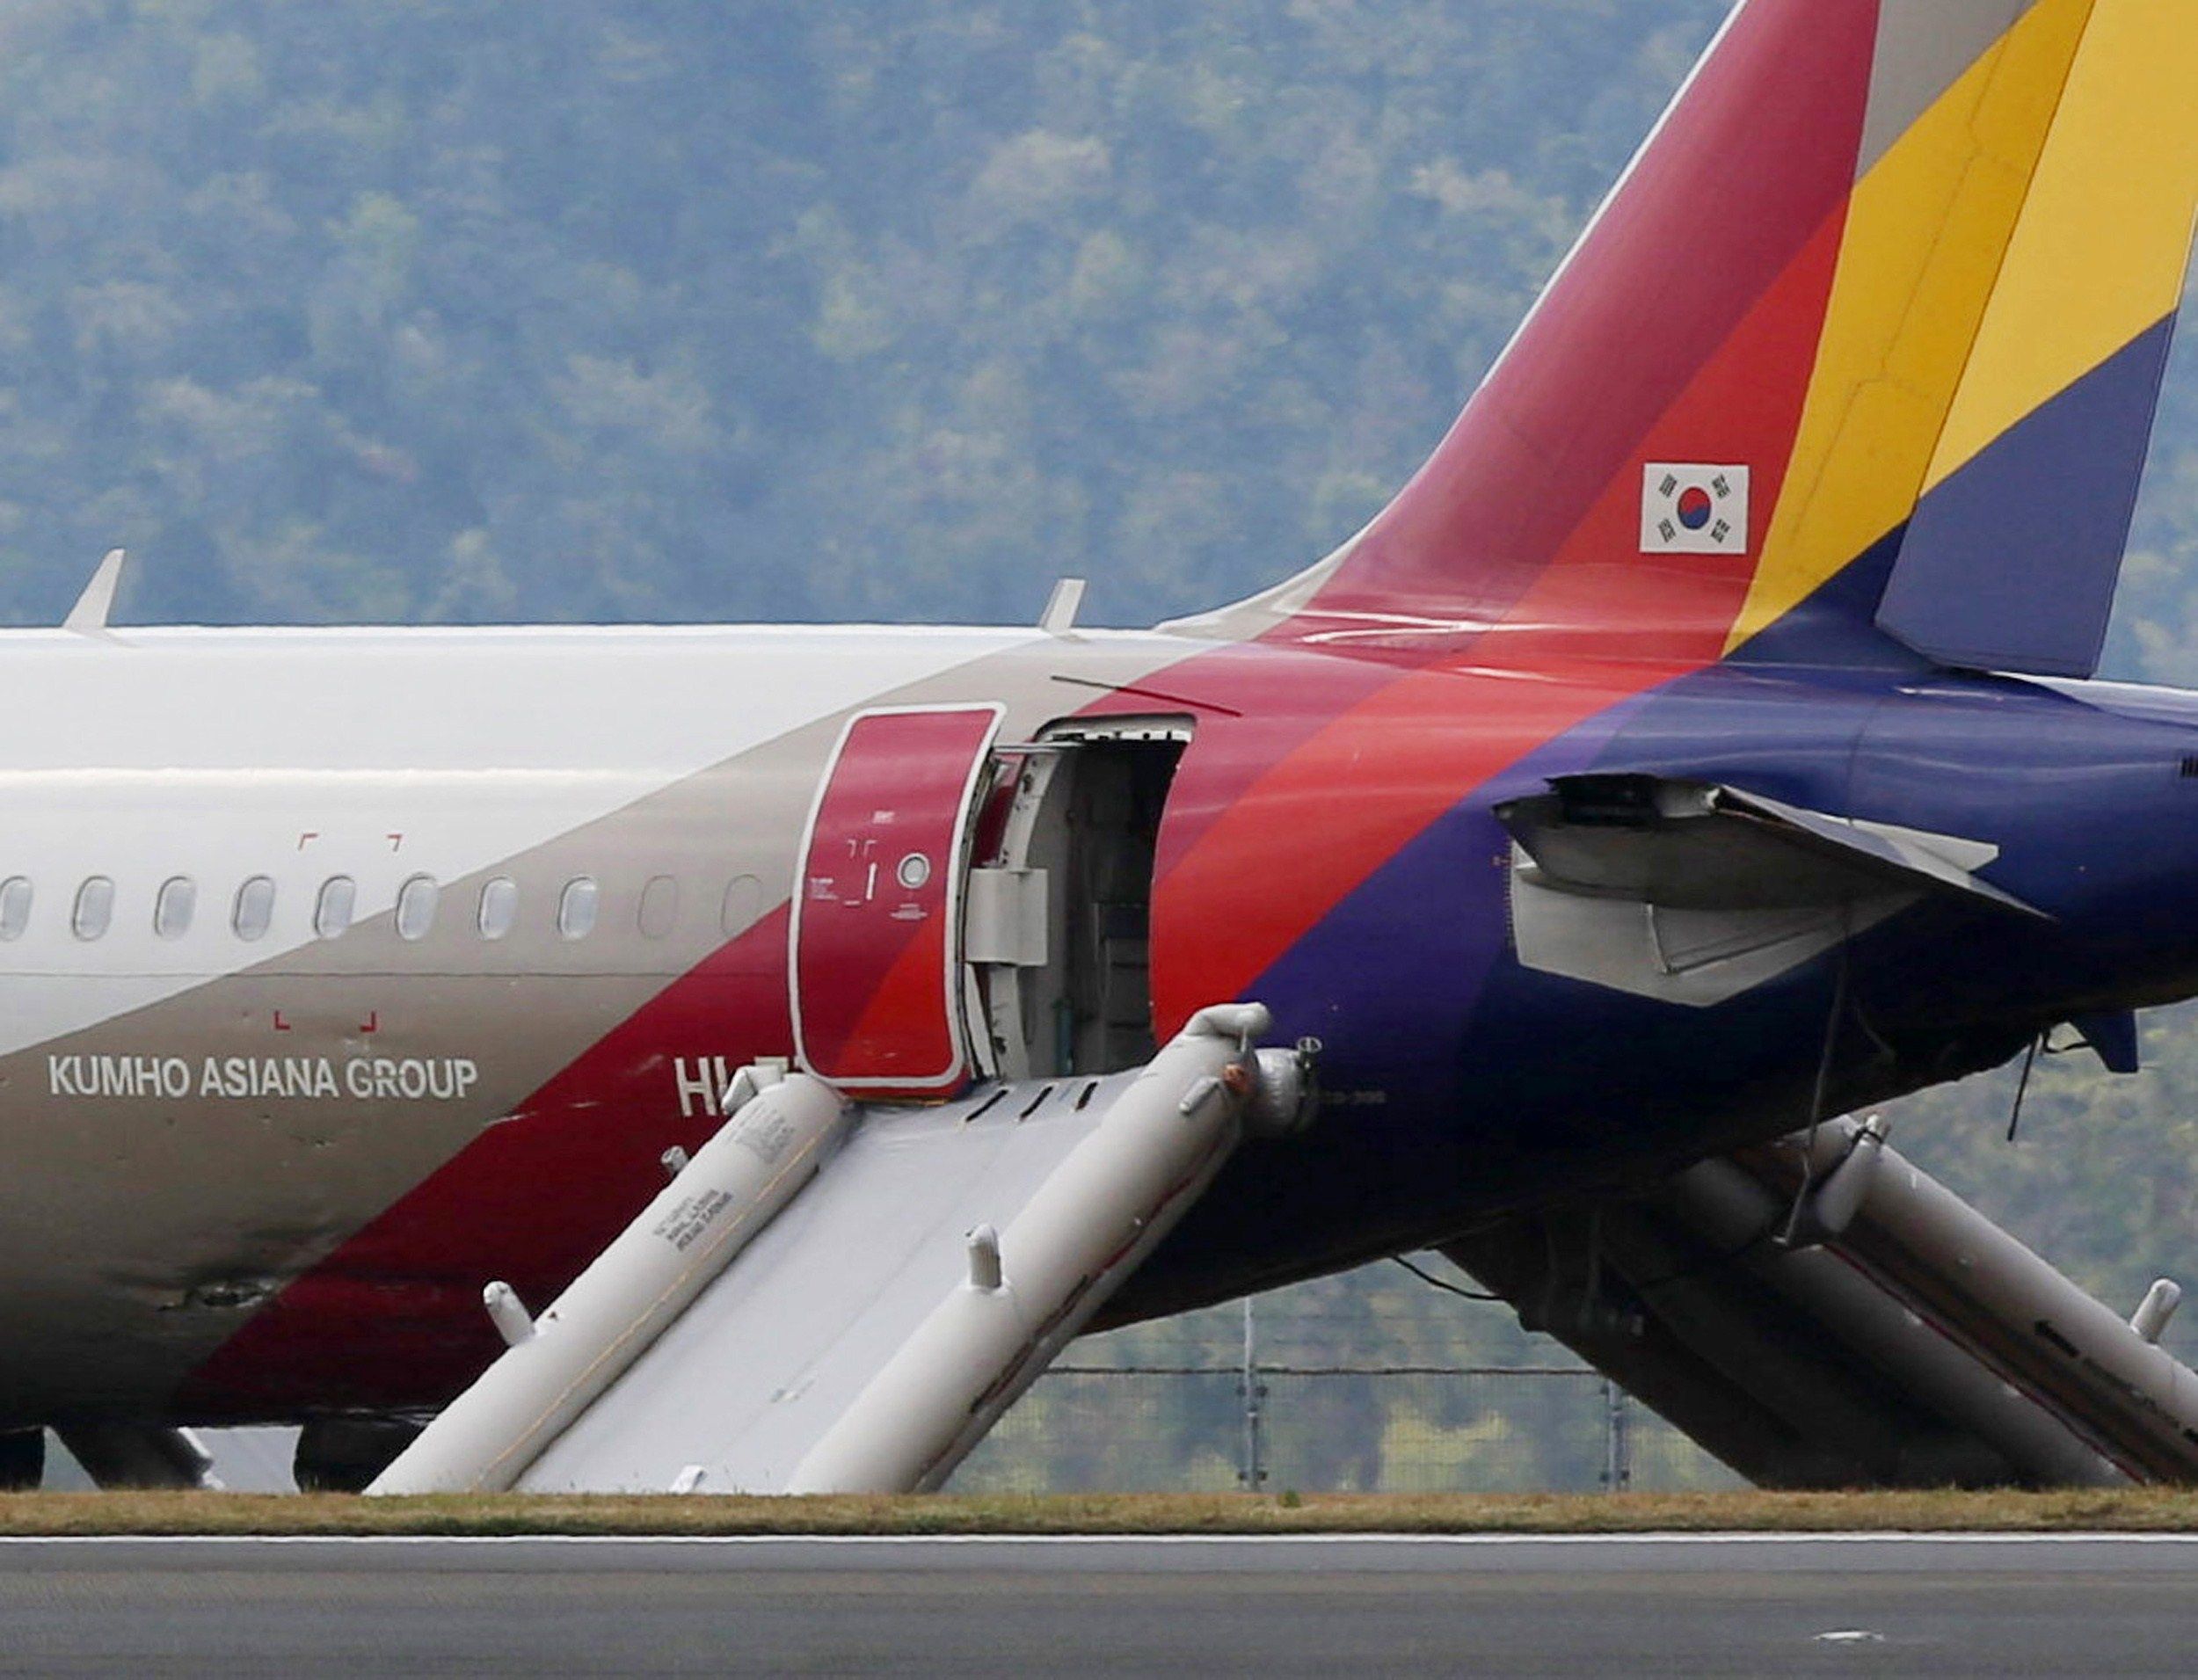 Asiana aircraft with evacuation slide